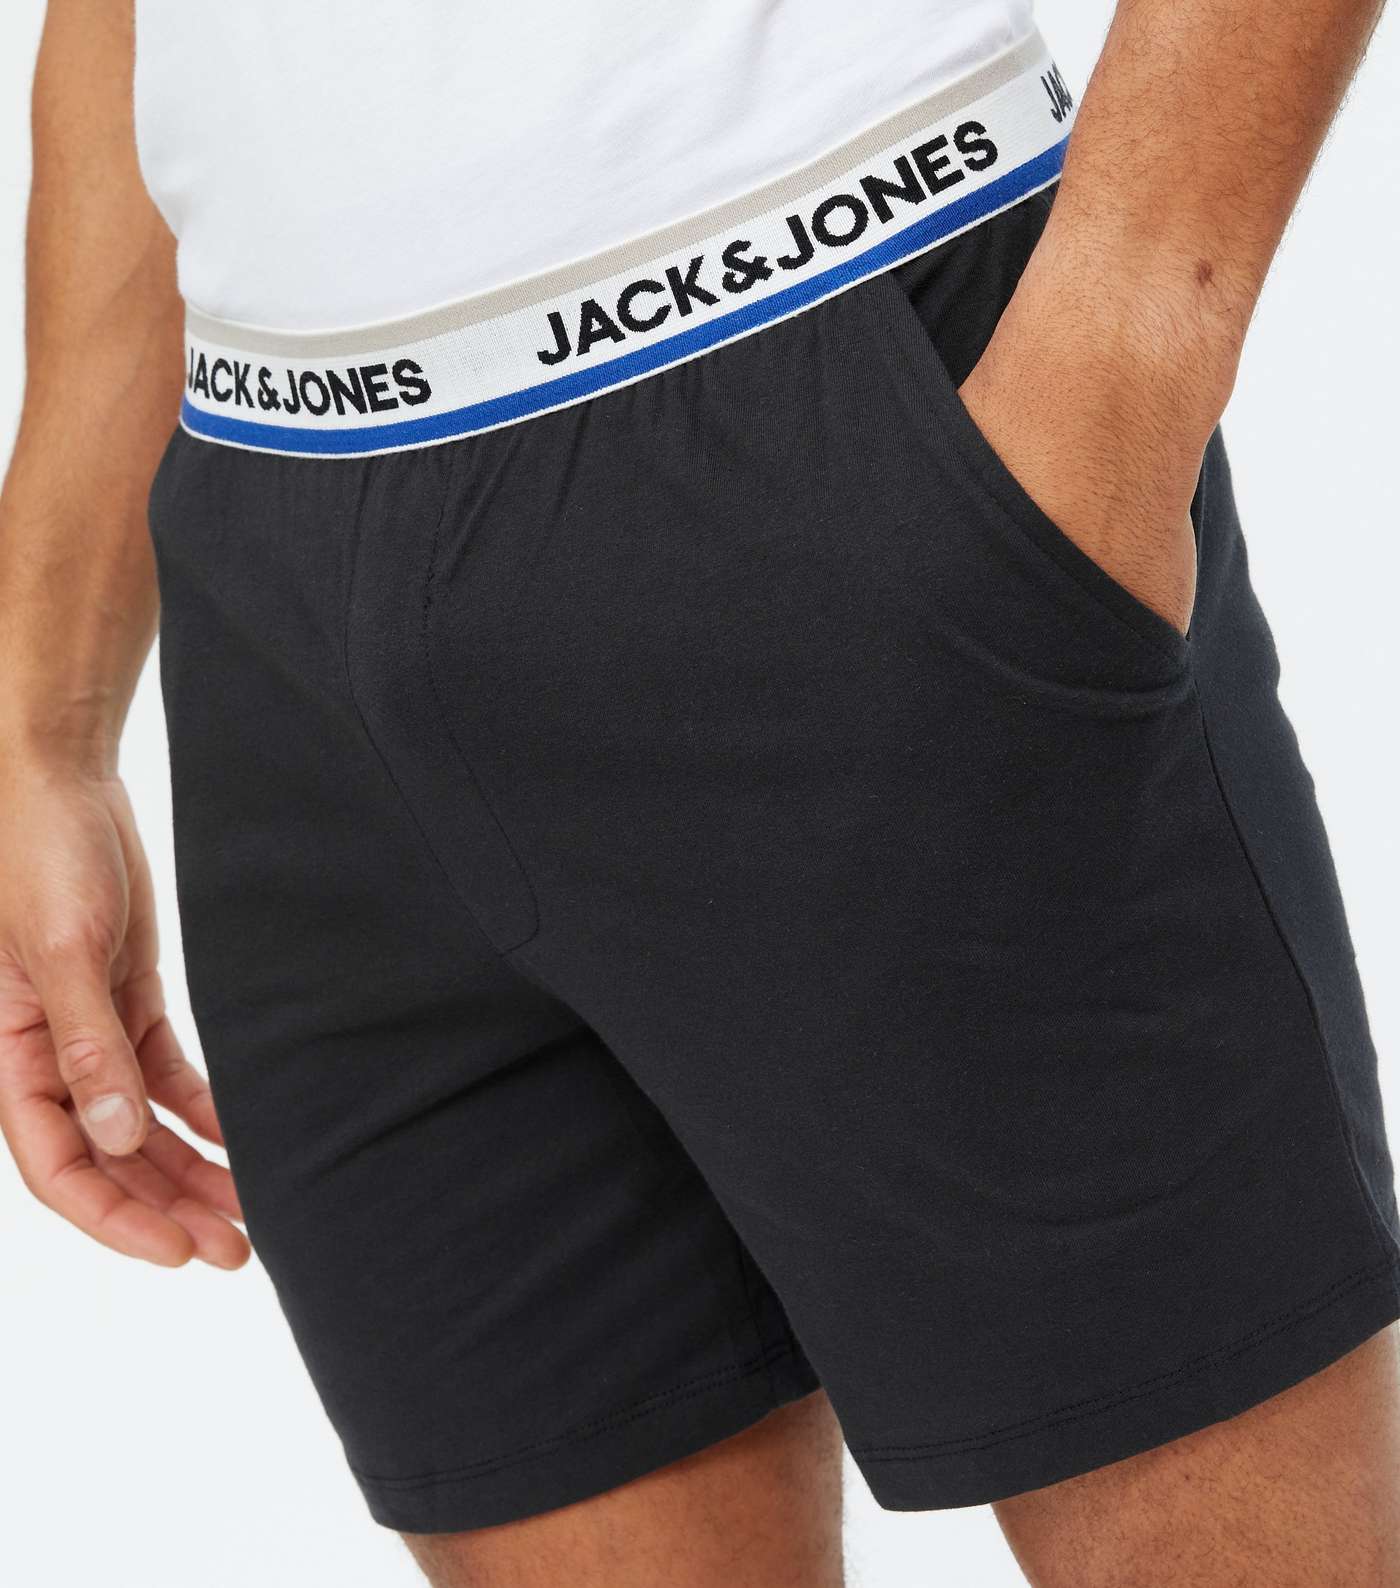 Jack & Jones White Loungewear Set Image 3